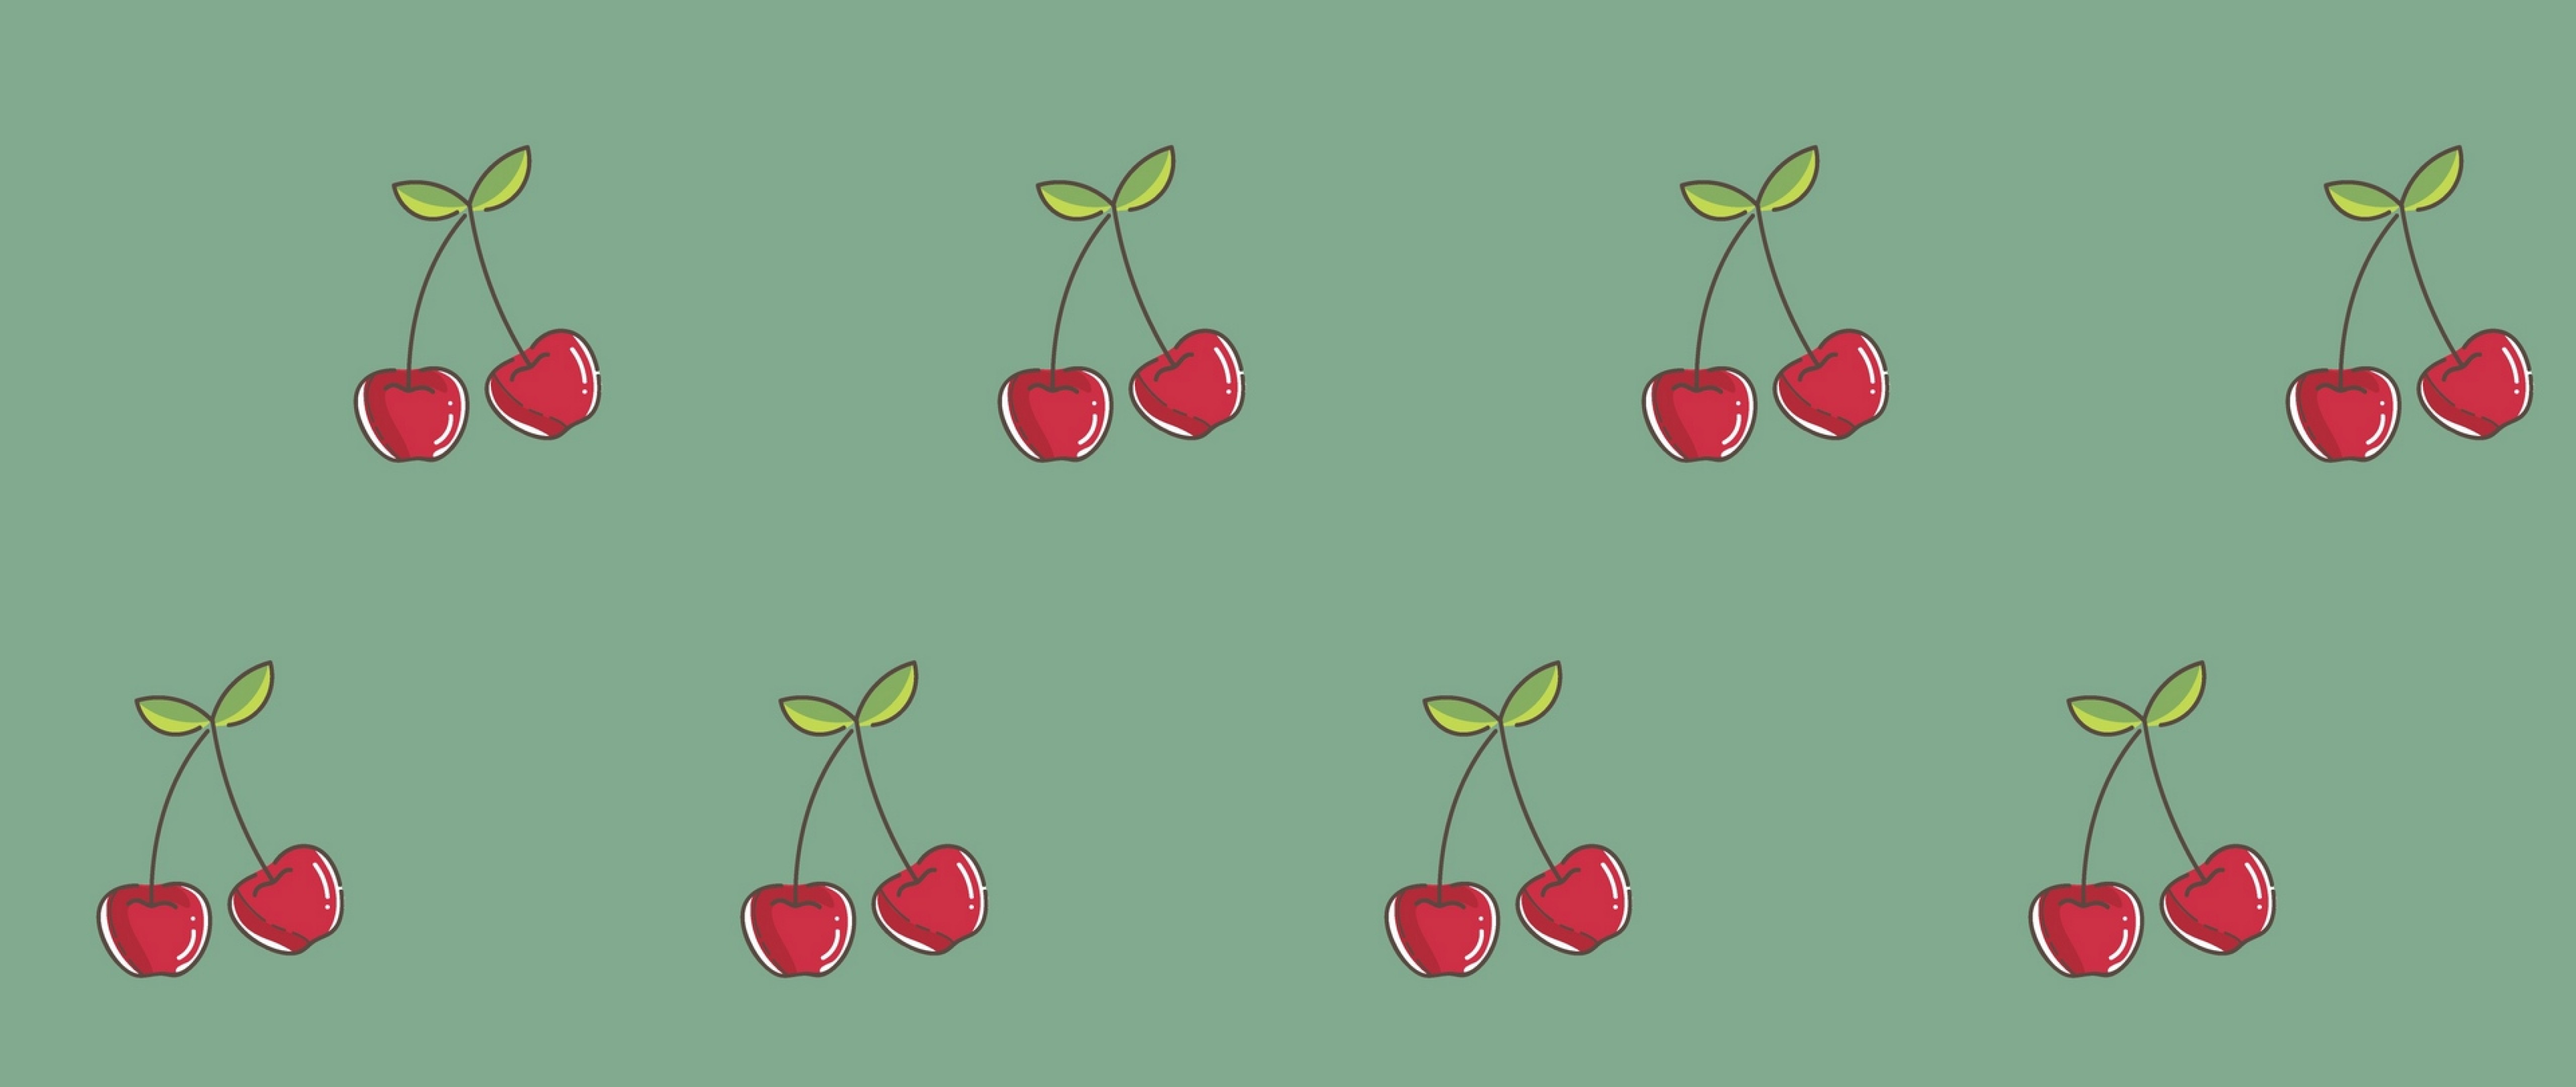 Berries patterns HD Wallpaper